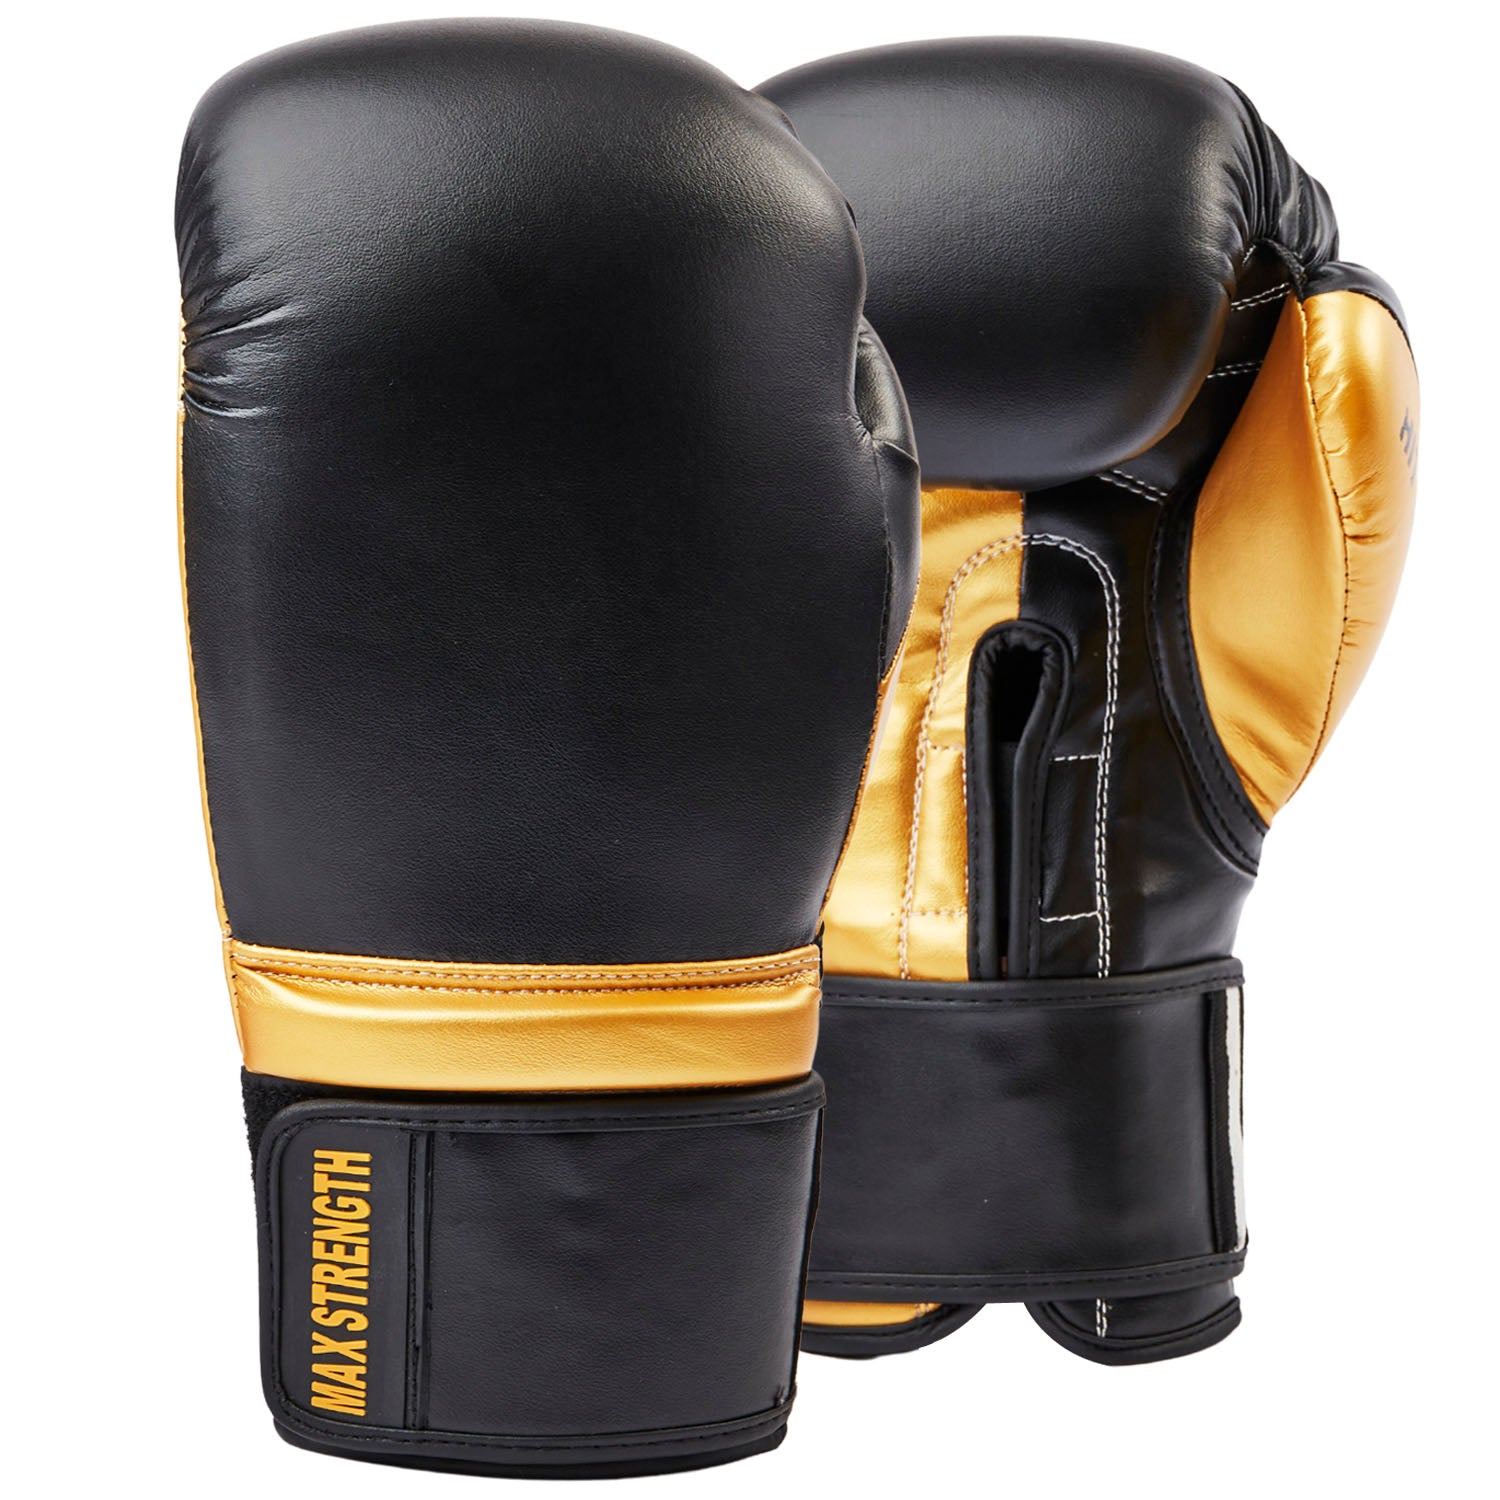 Gold 12oz Boxing gloves